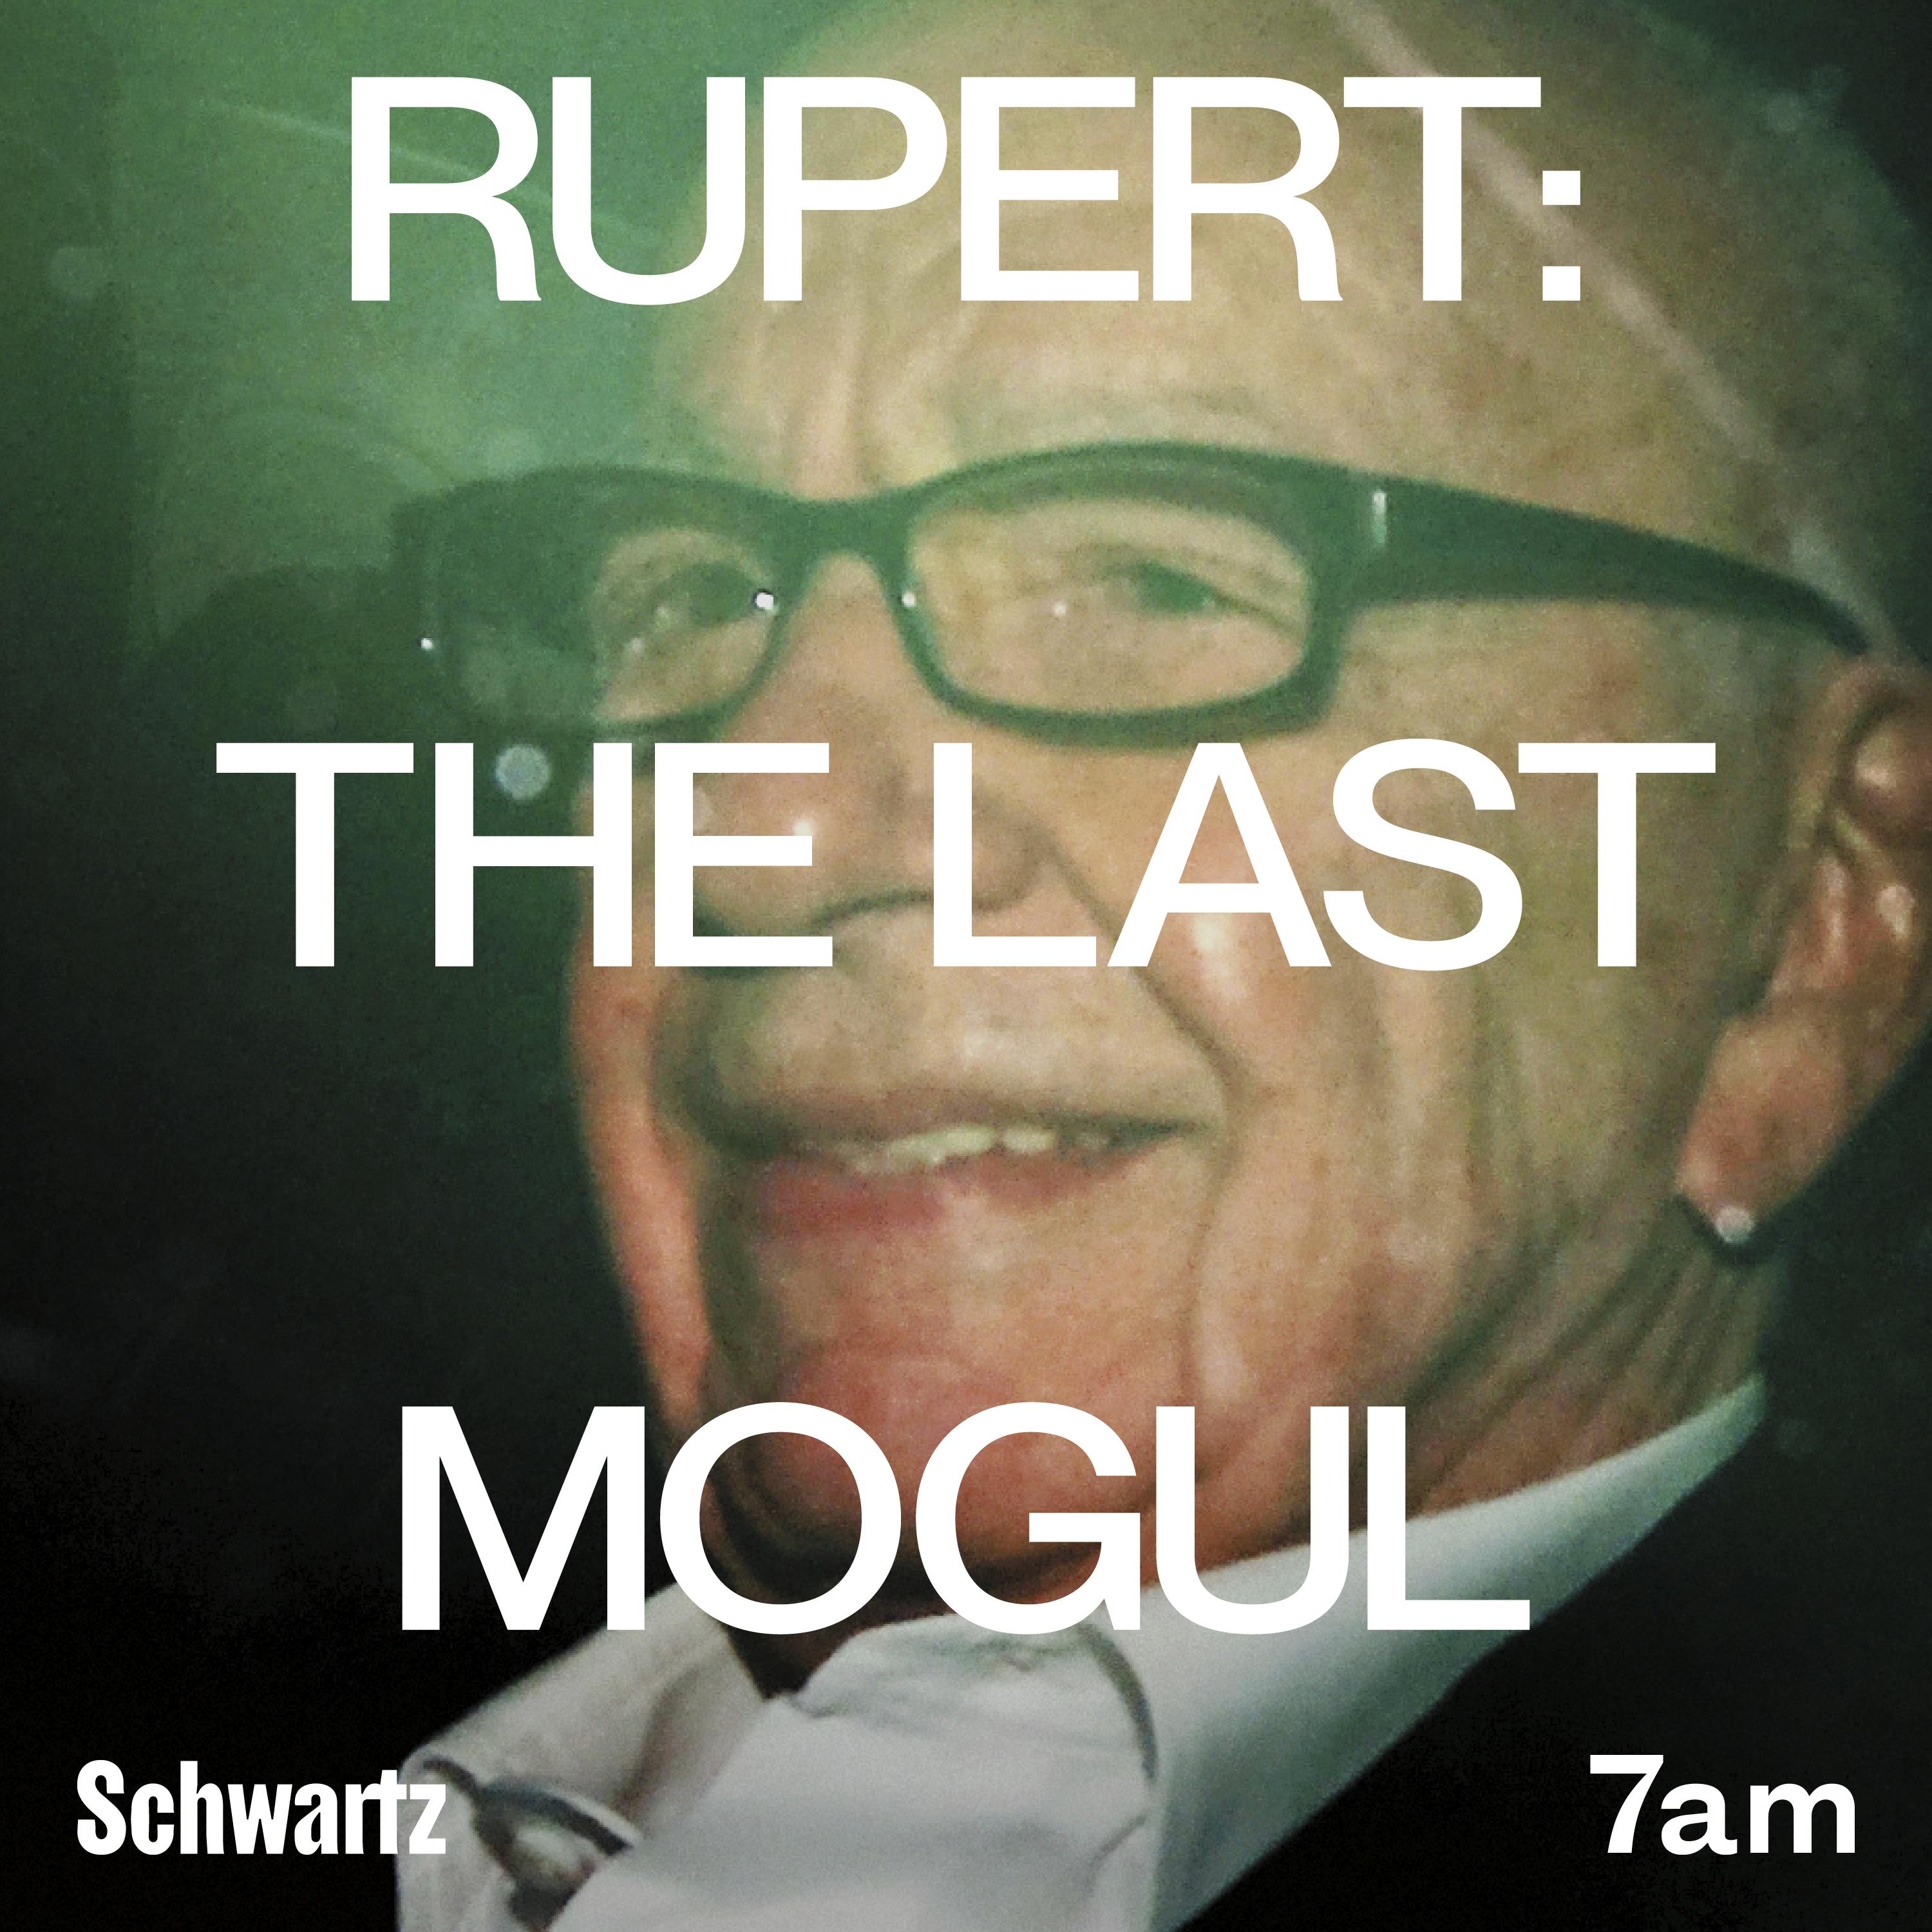 Rupert: The last mogul: My dear Prime Minister